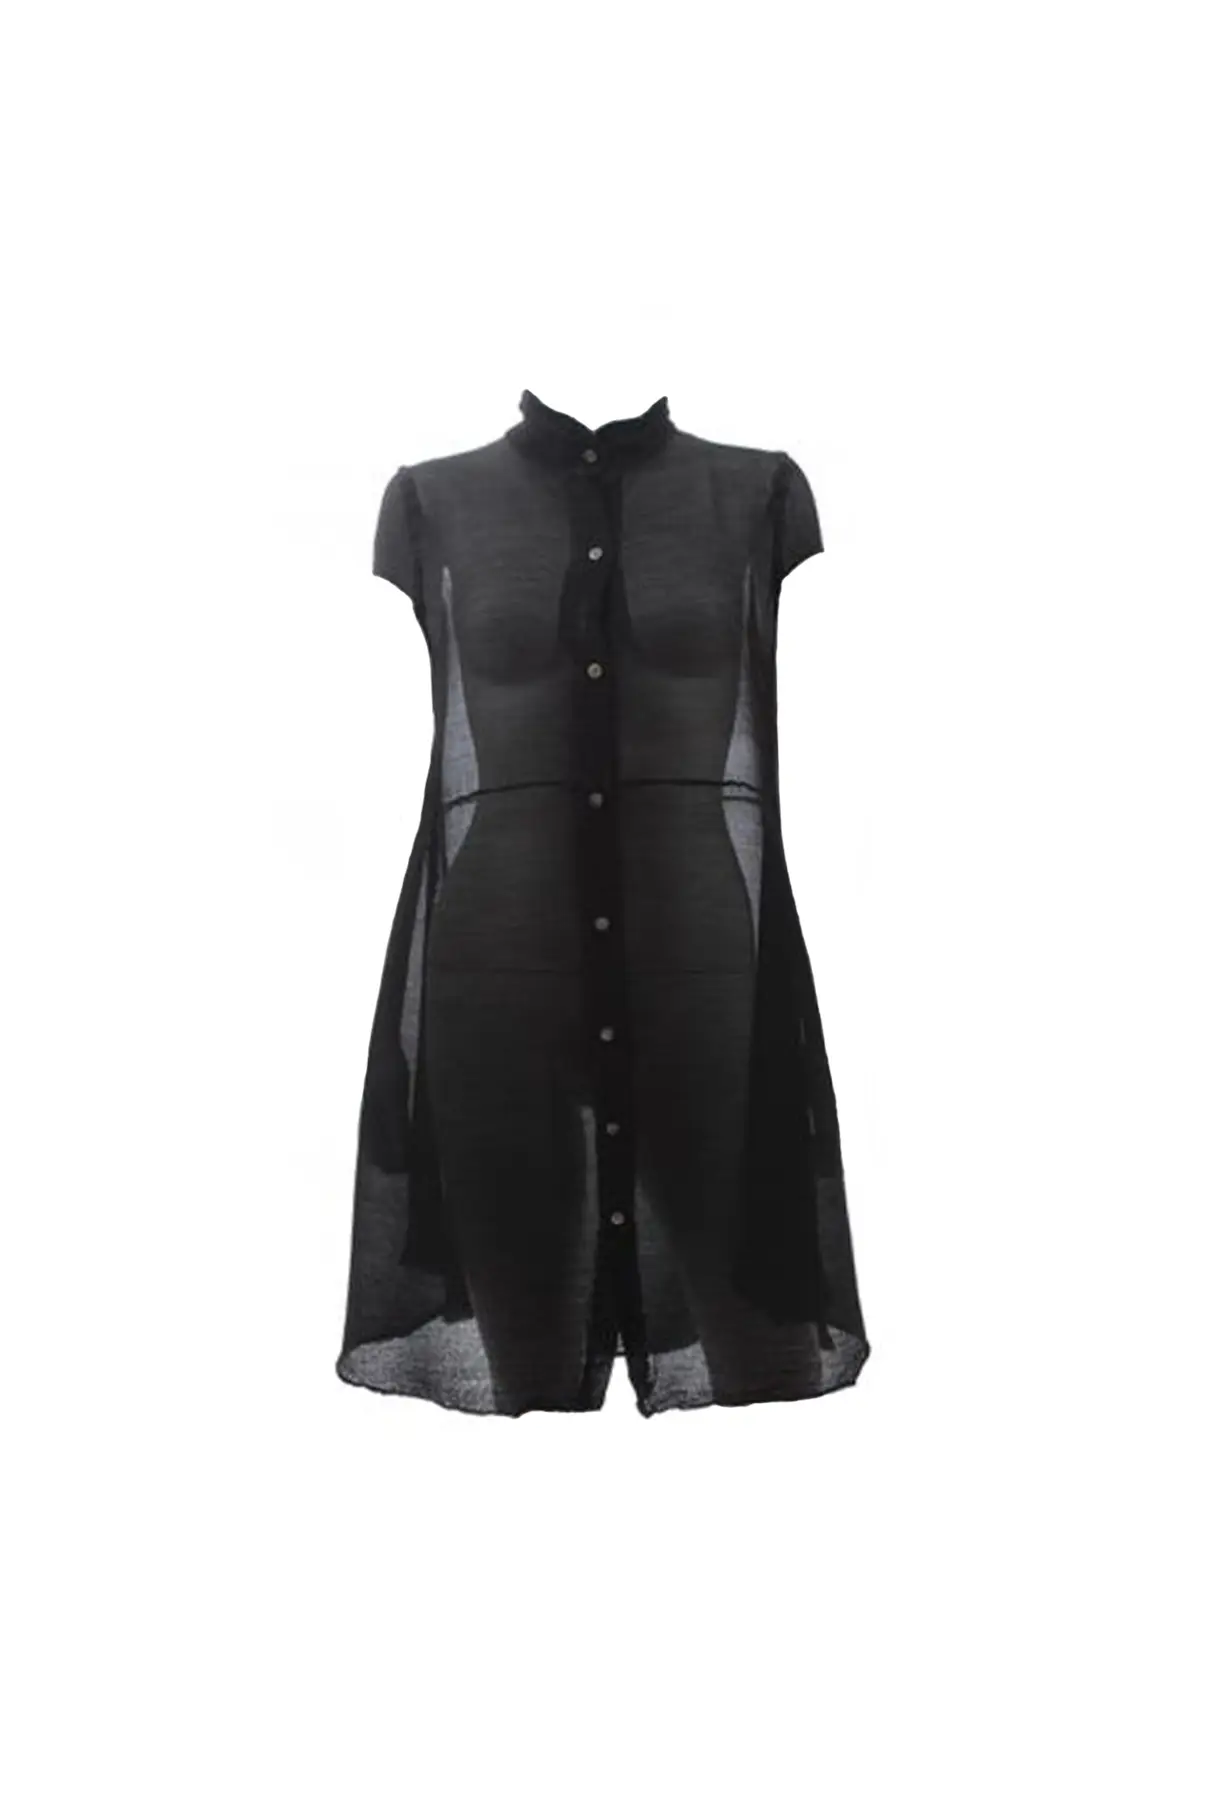 black-polyester-issey-miyake-dress.jpg